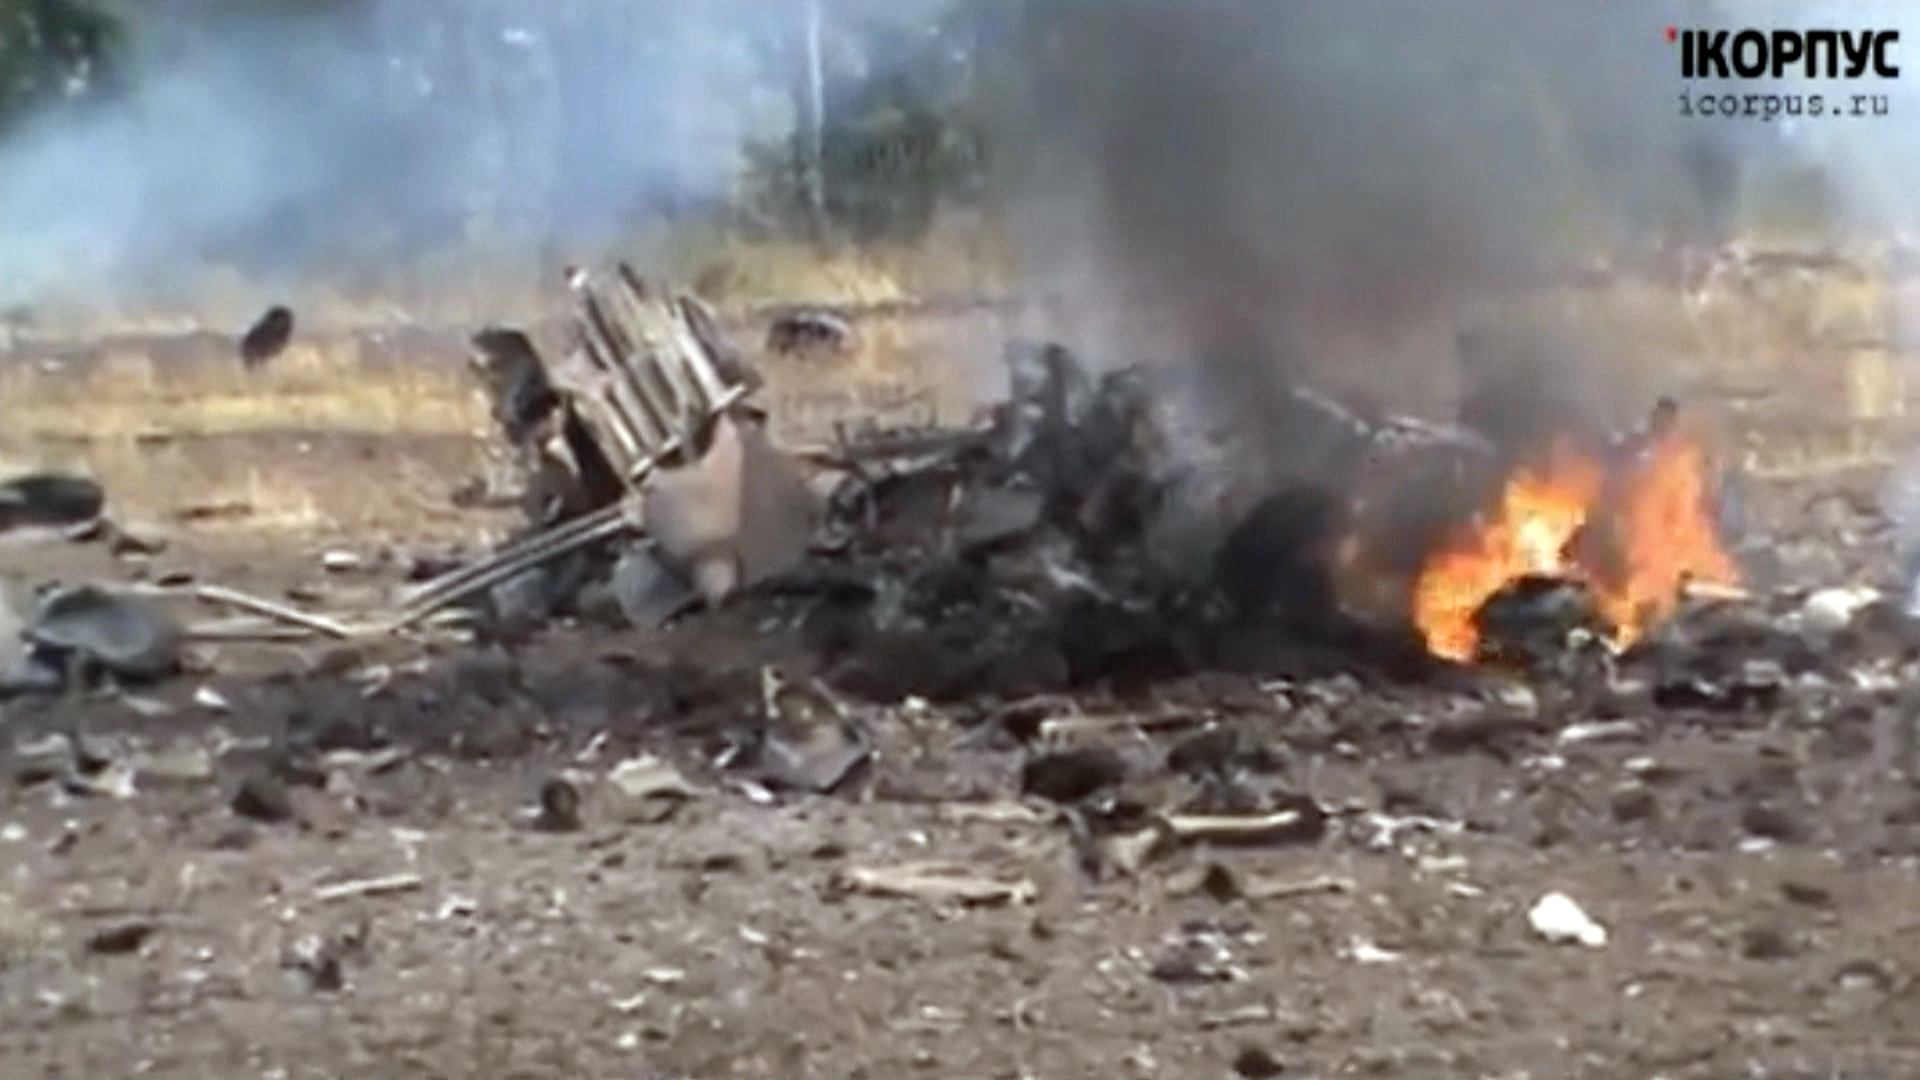 Two Ukrainian Fighter Jets Shot Down Near MH17 Crash Site - NBC News